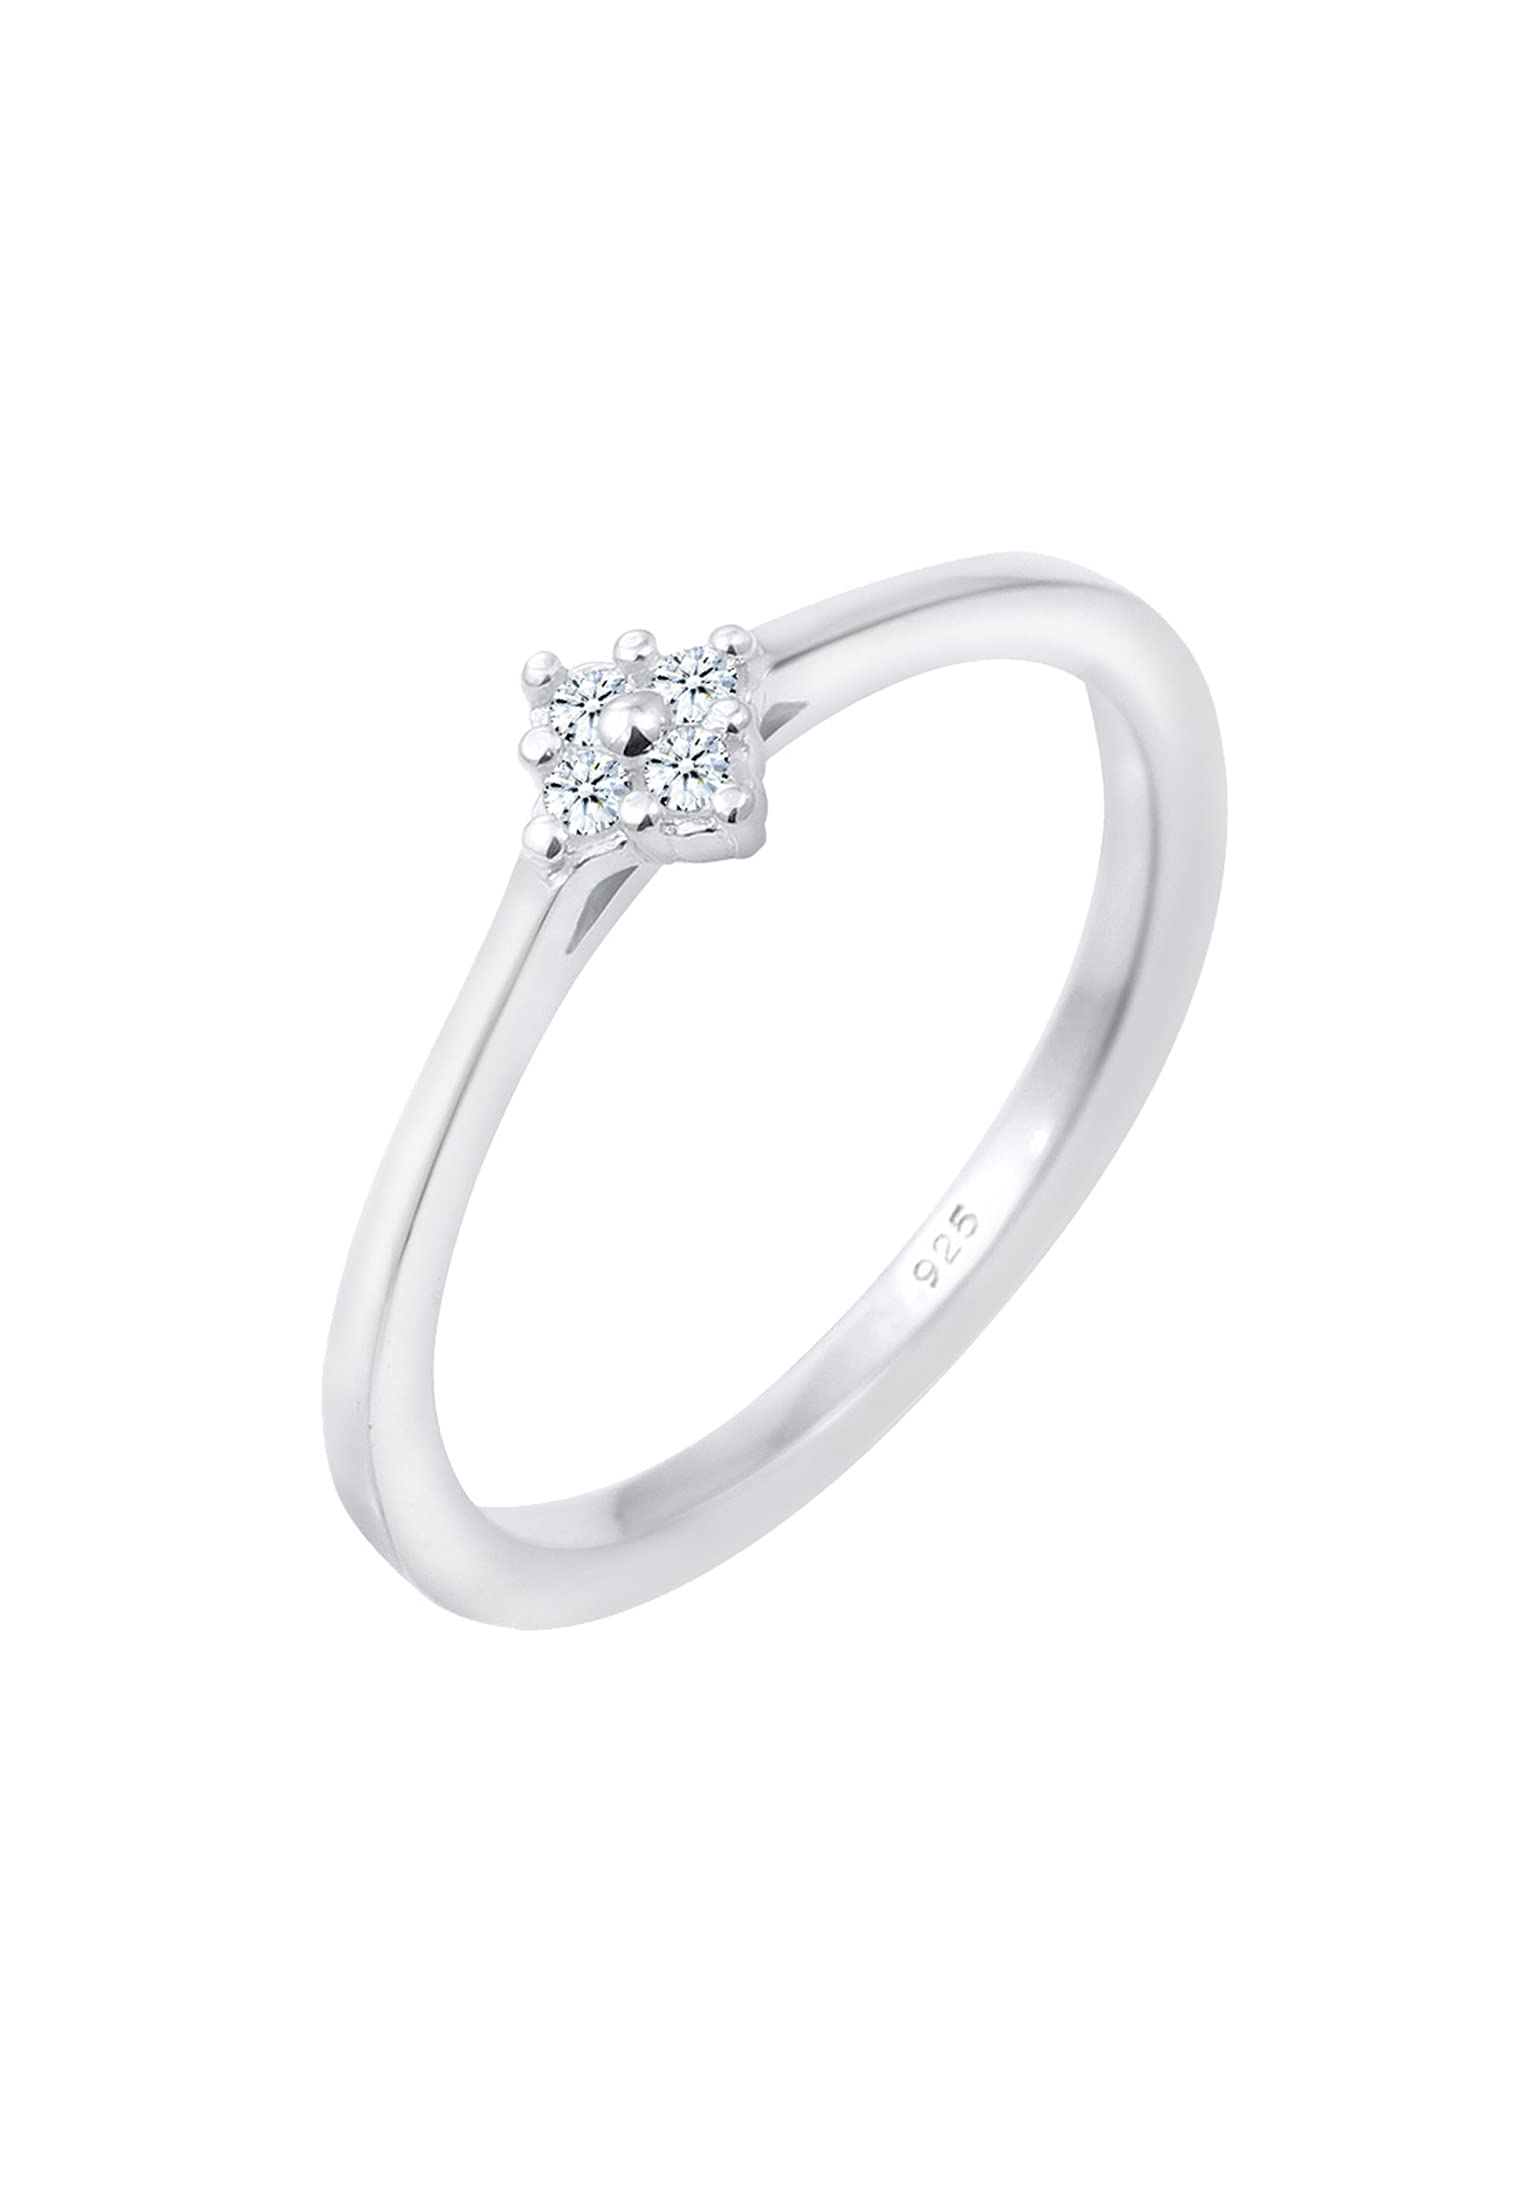 DIAMORE Ring Damen Verlobung Klassisch mit Diamant (0.08 ct.) in 925 Sterling Silber